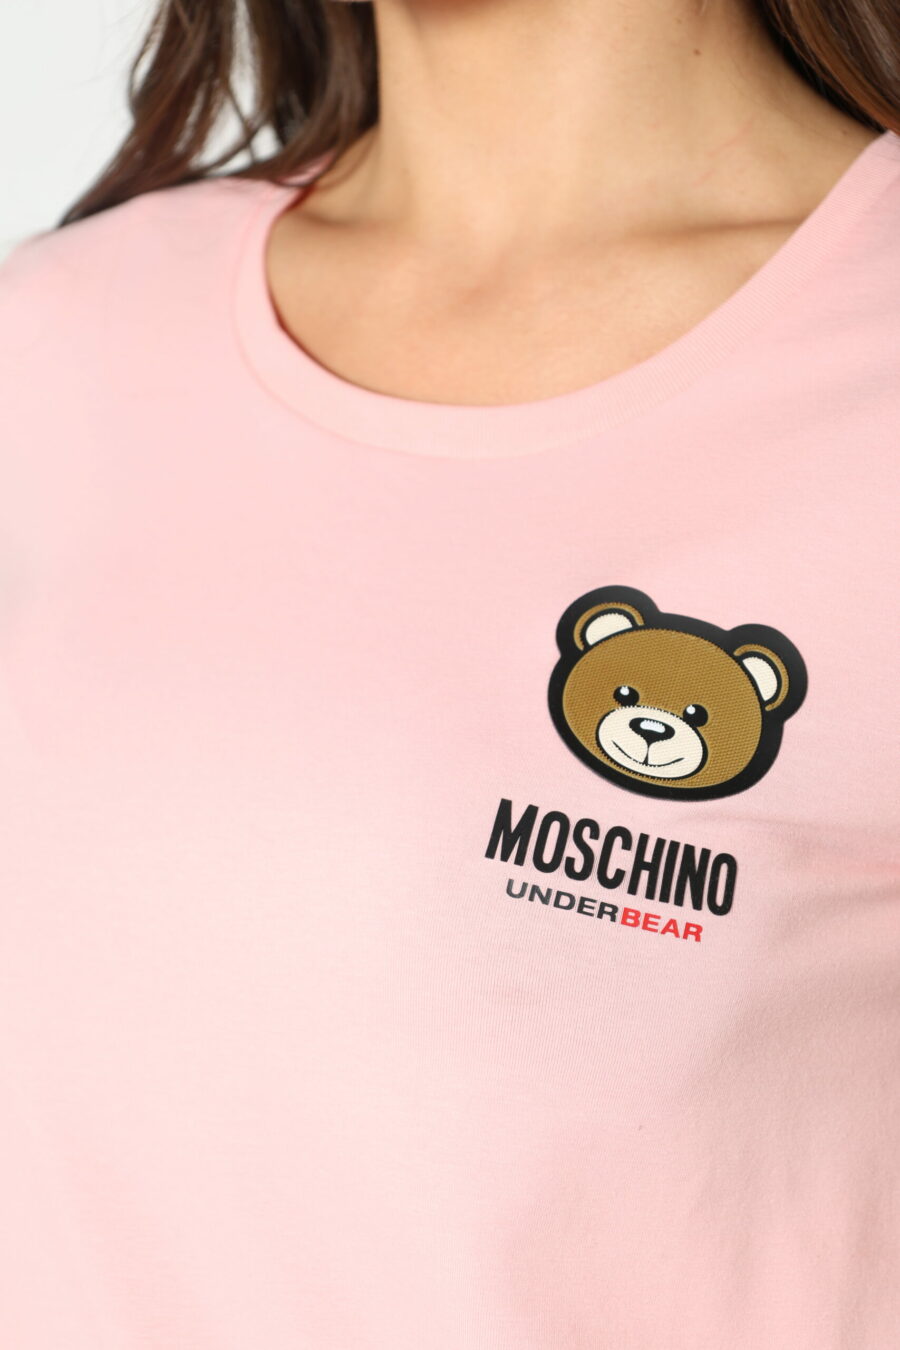 Camiseta rosa con logo parche oso "underbear" - 8052865435499 322 scaled